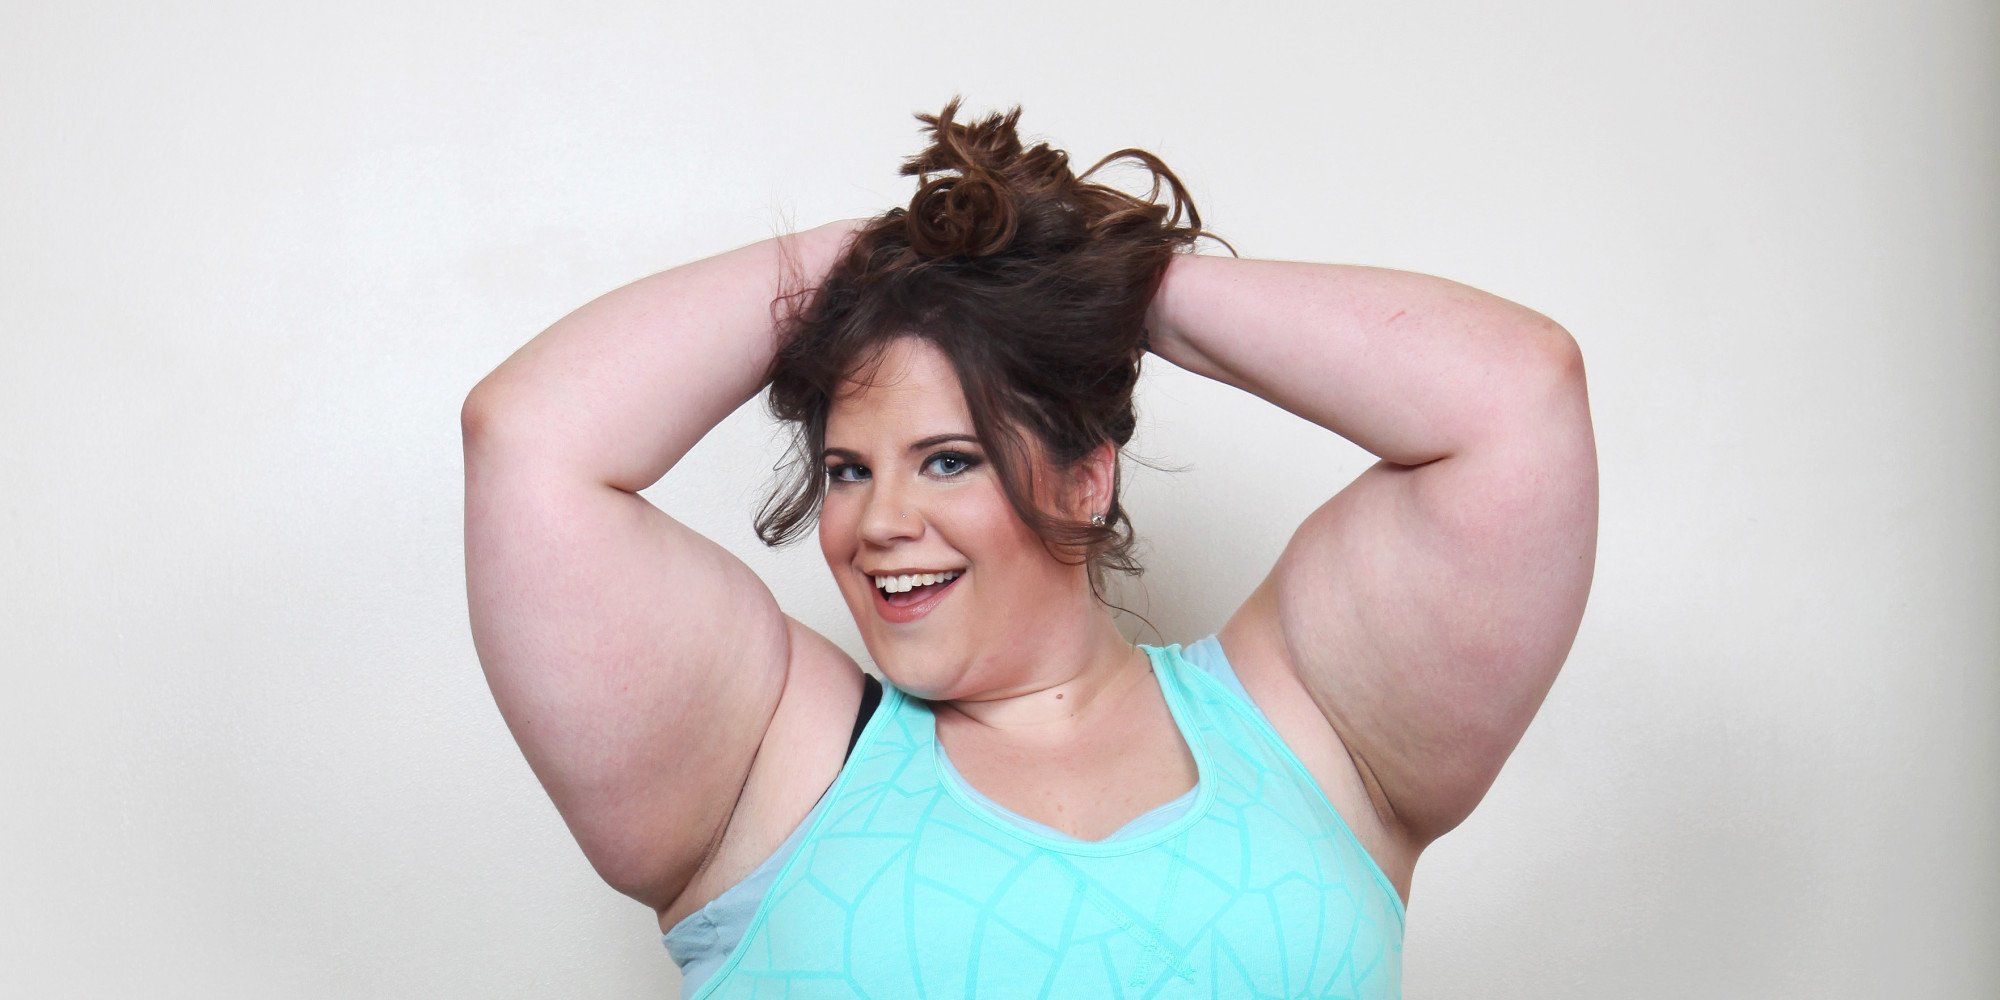 Sexy fat neked woman dancing - Nude photos